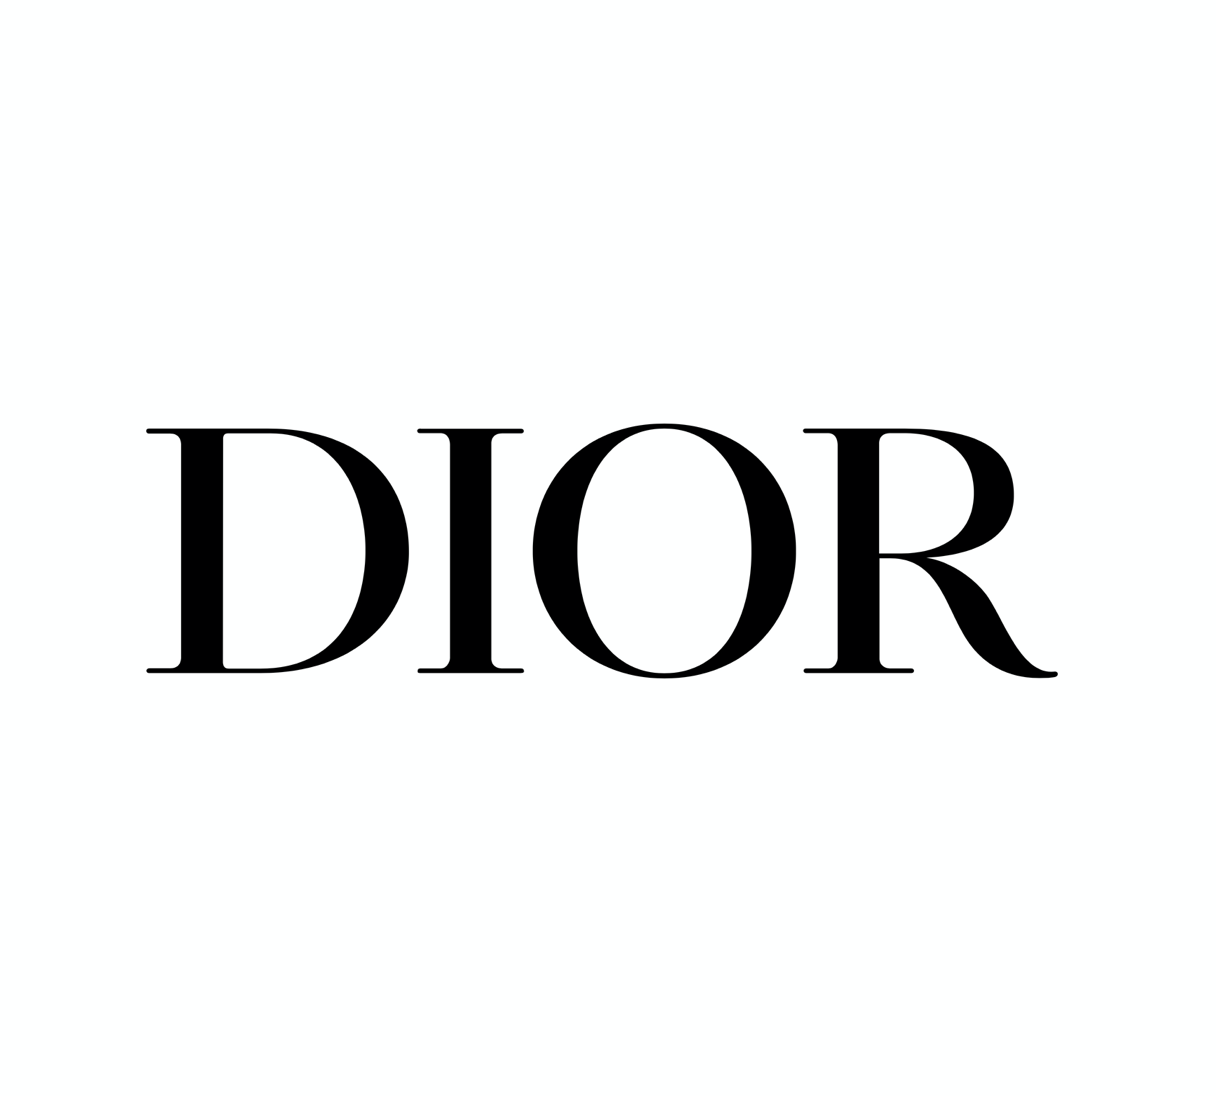 dior 迪奥品牌简介:克里斯汀·迪奥(英语:christian dior),简称迪奥